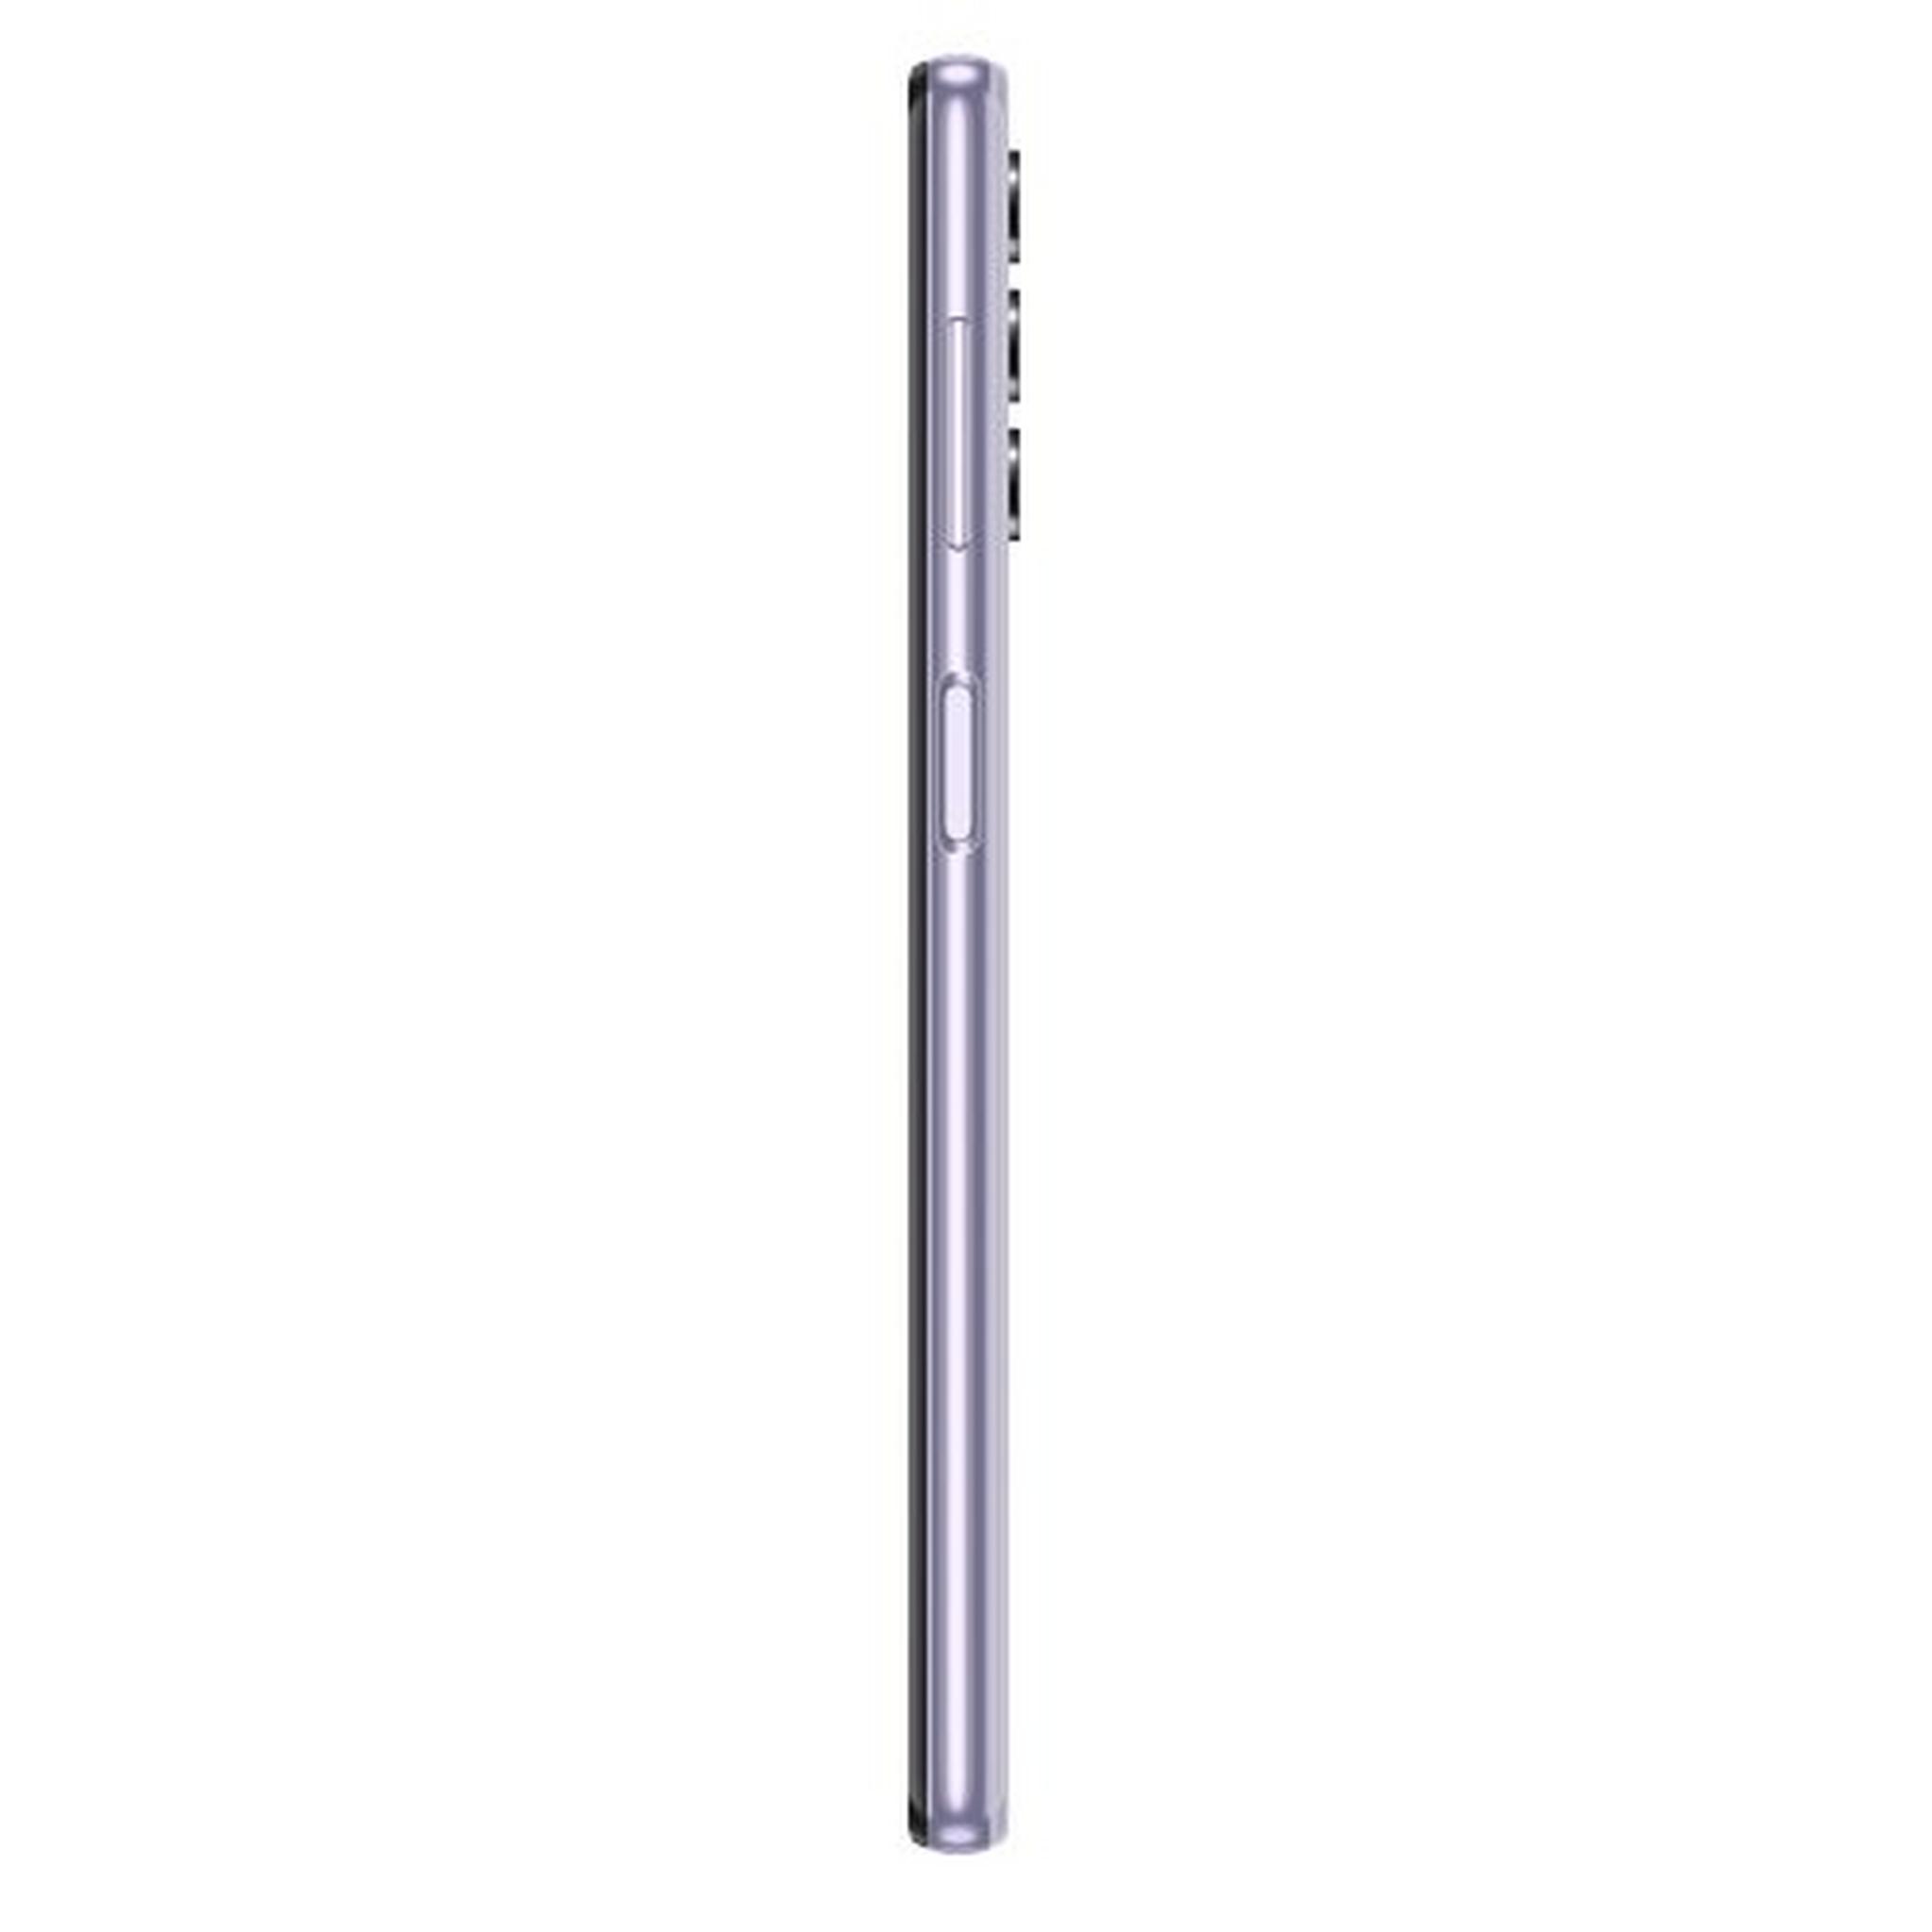 Samsung Galaxy A32 5G 128GB Phone - Awesome Violet